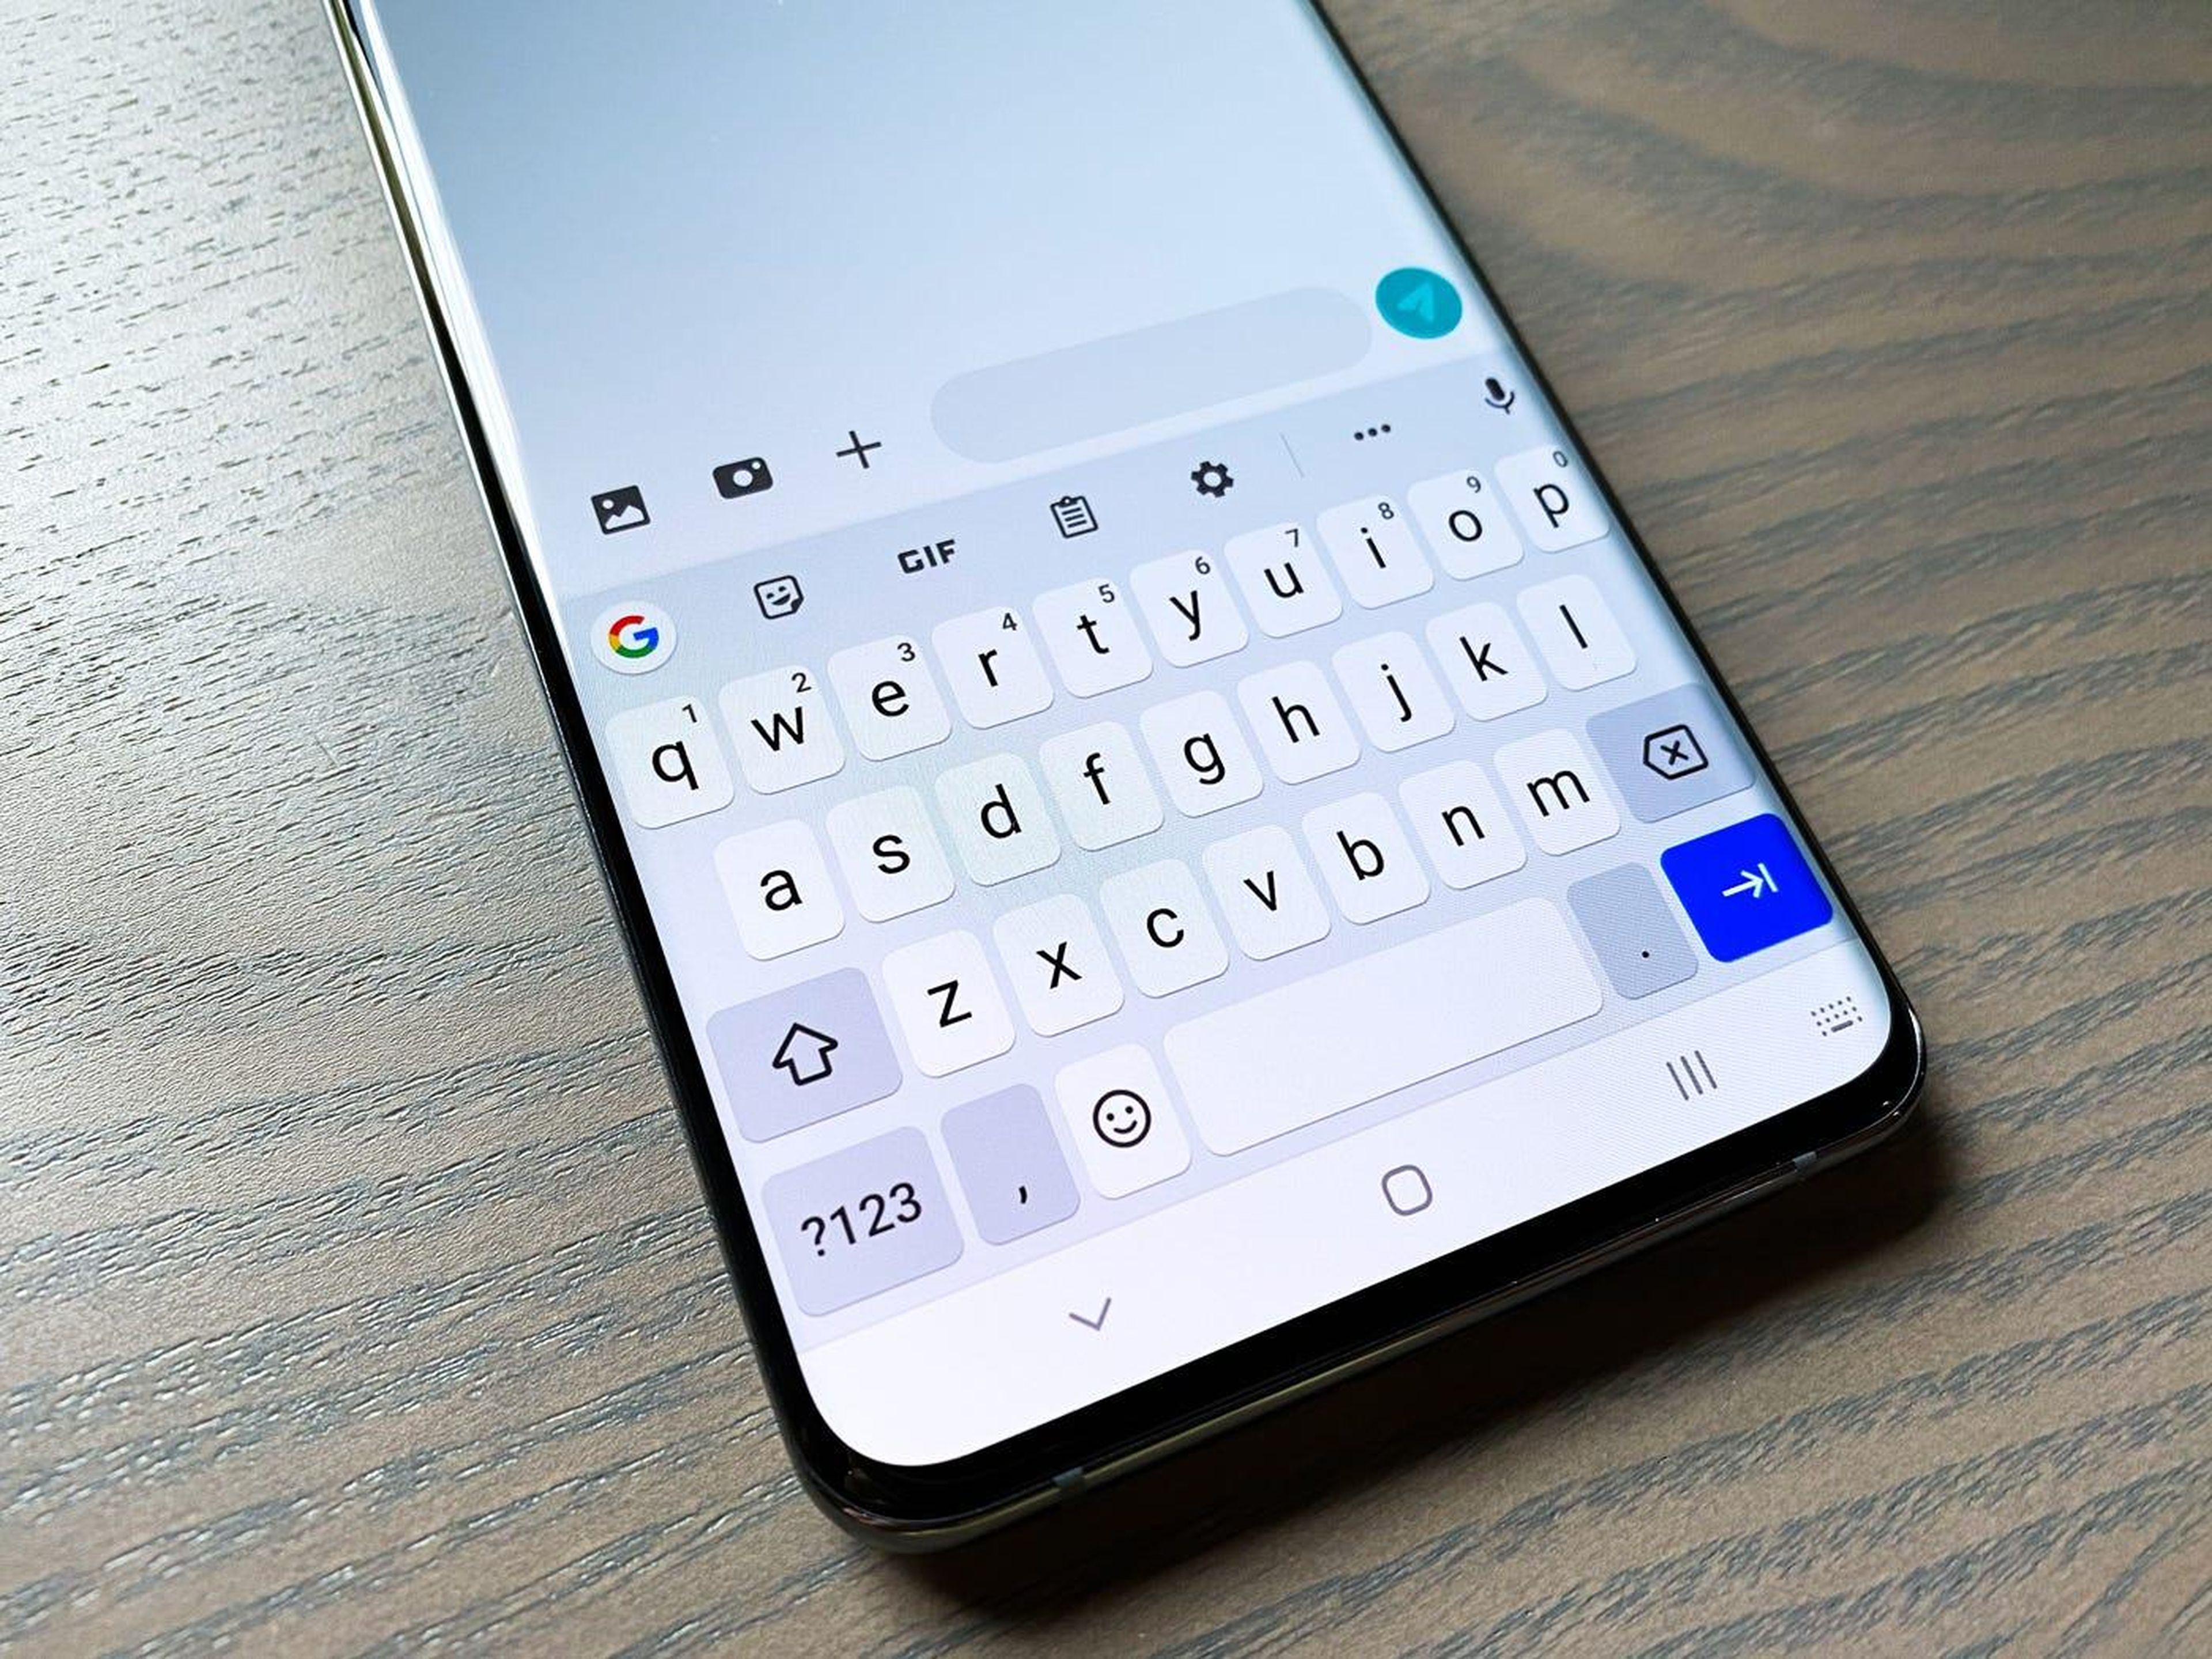 Change the keyboard to Google's Gboard.